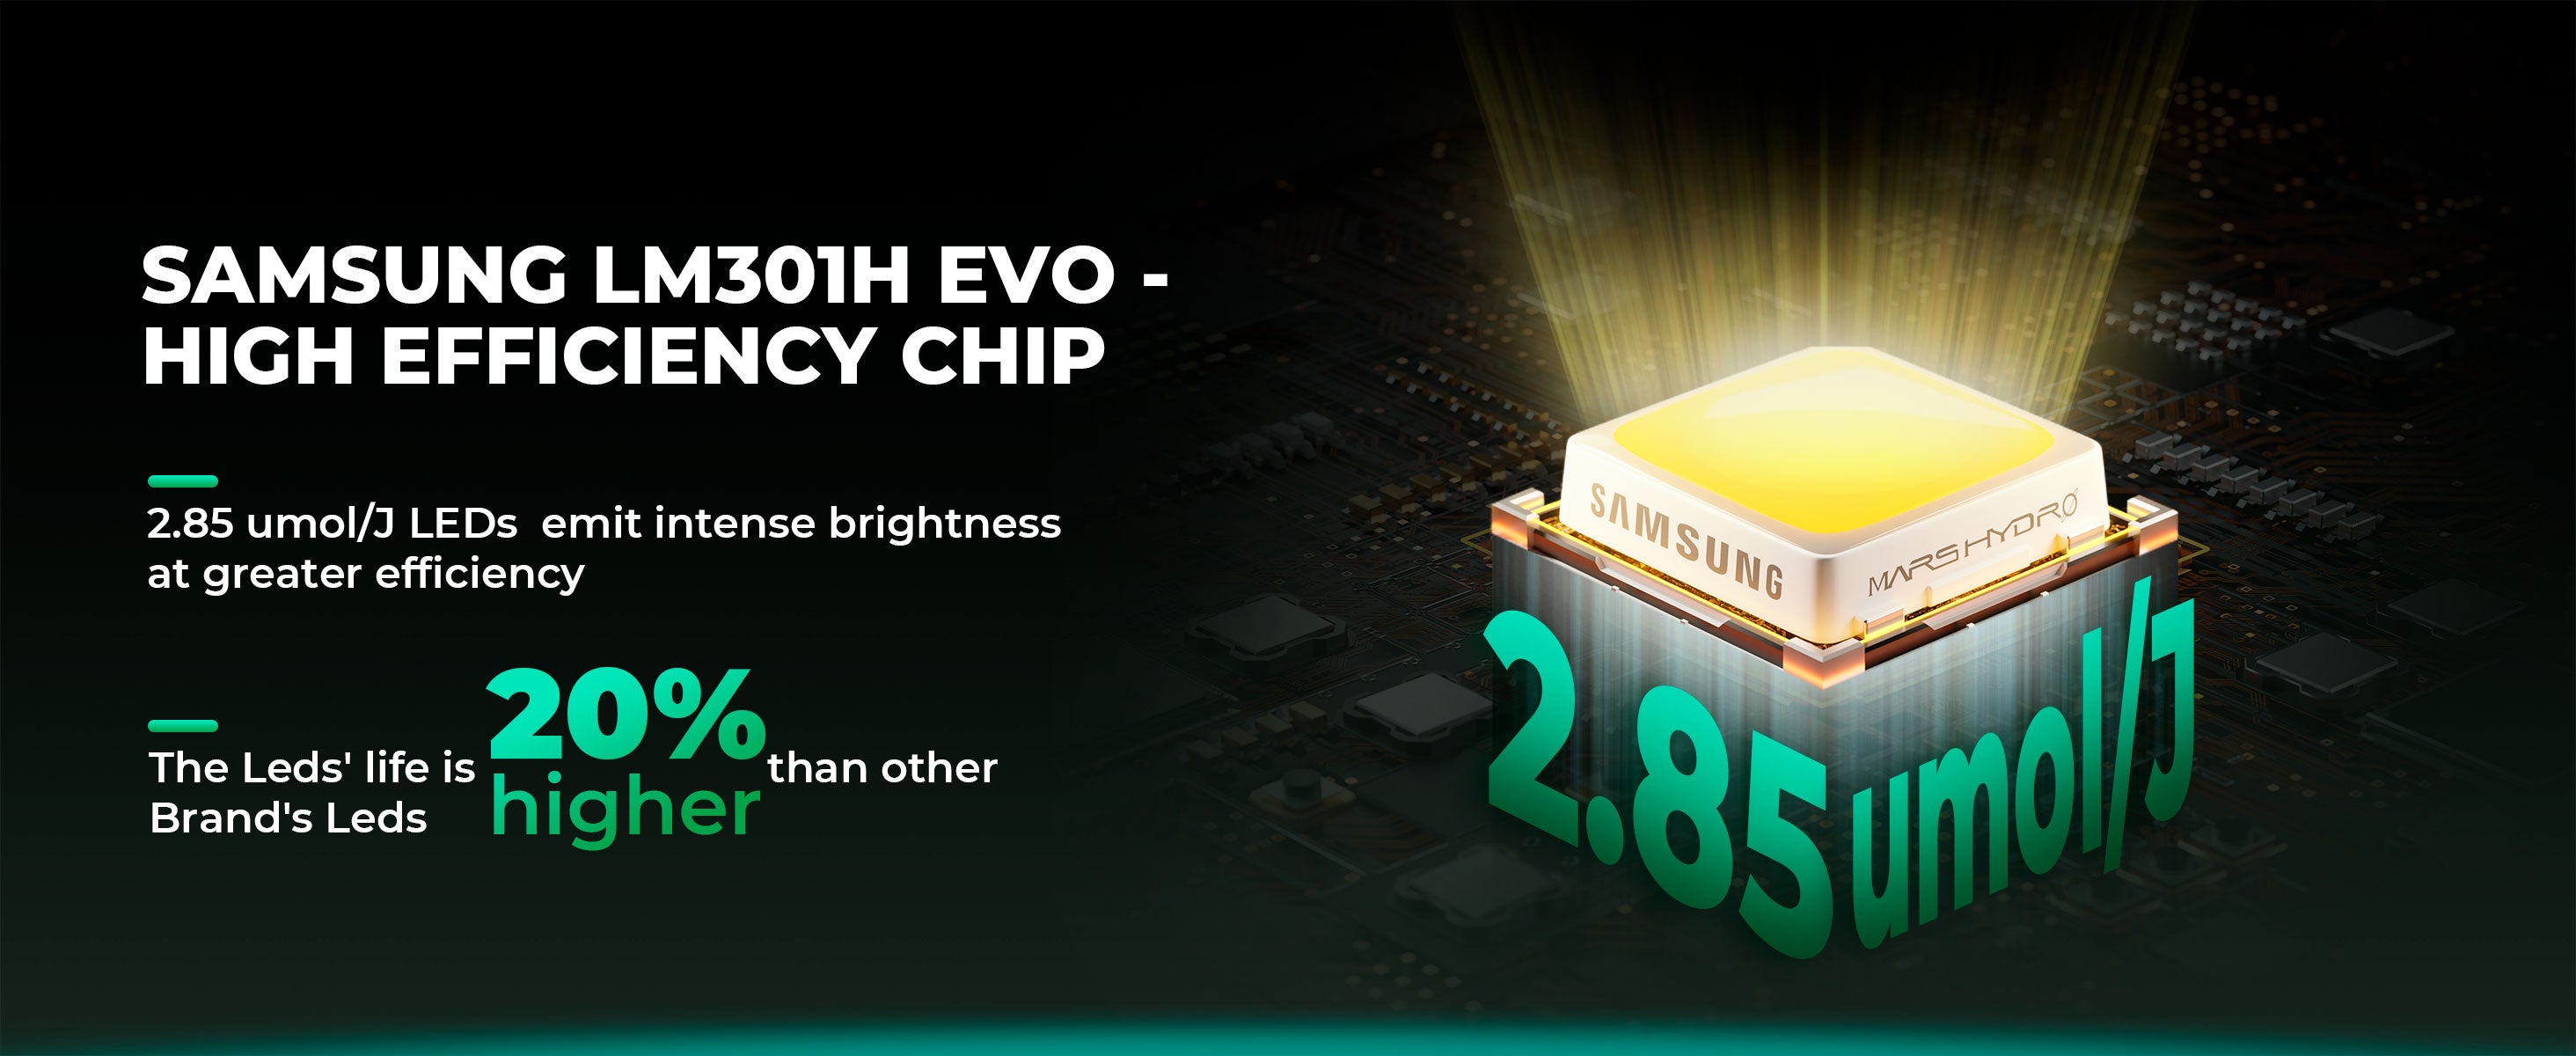 MARS HYDRO fc4000 Samsung 301H EVO Chip